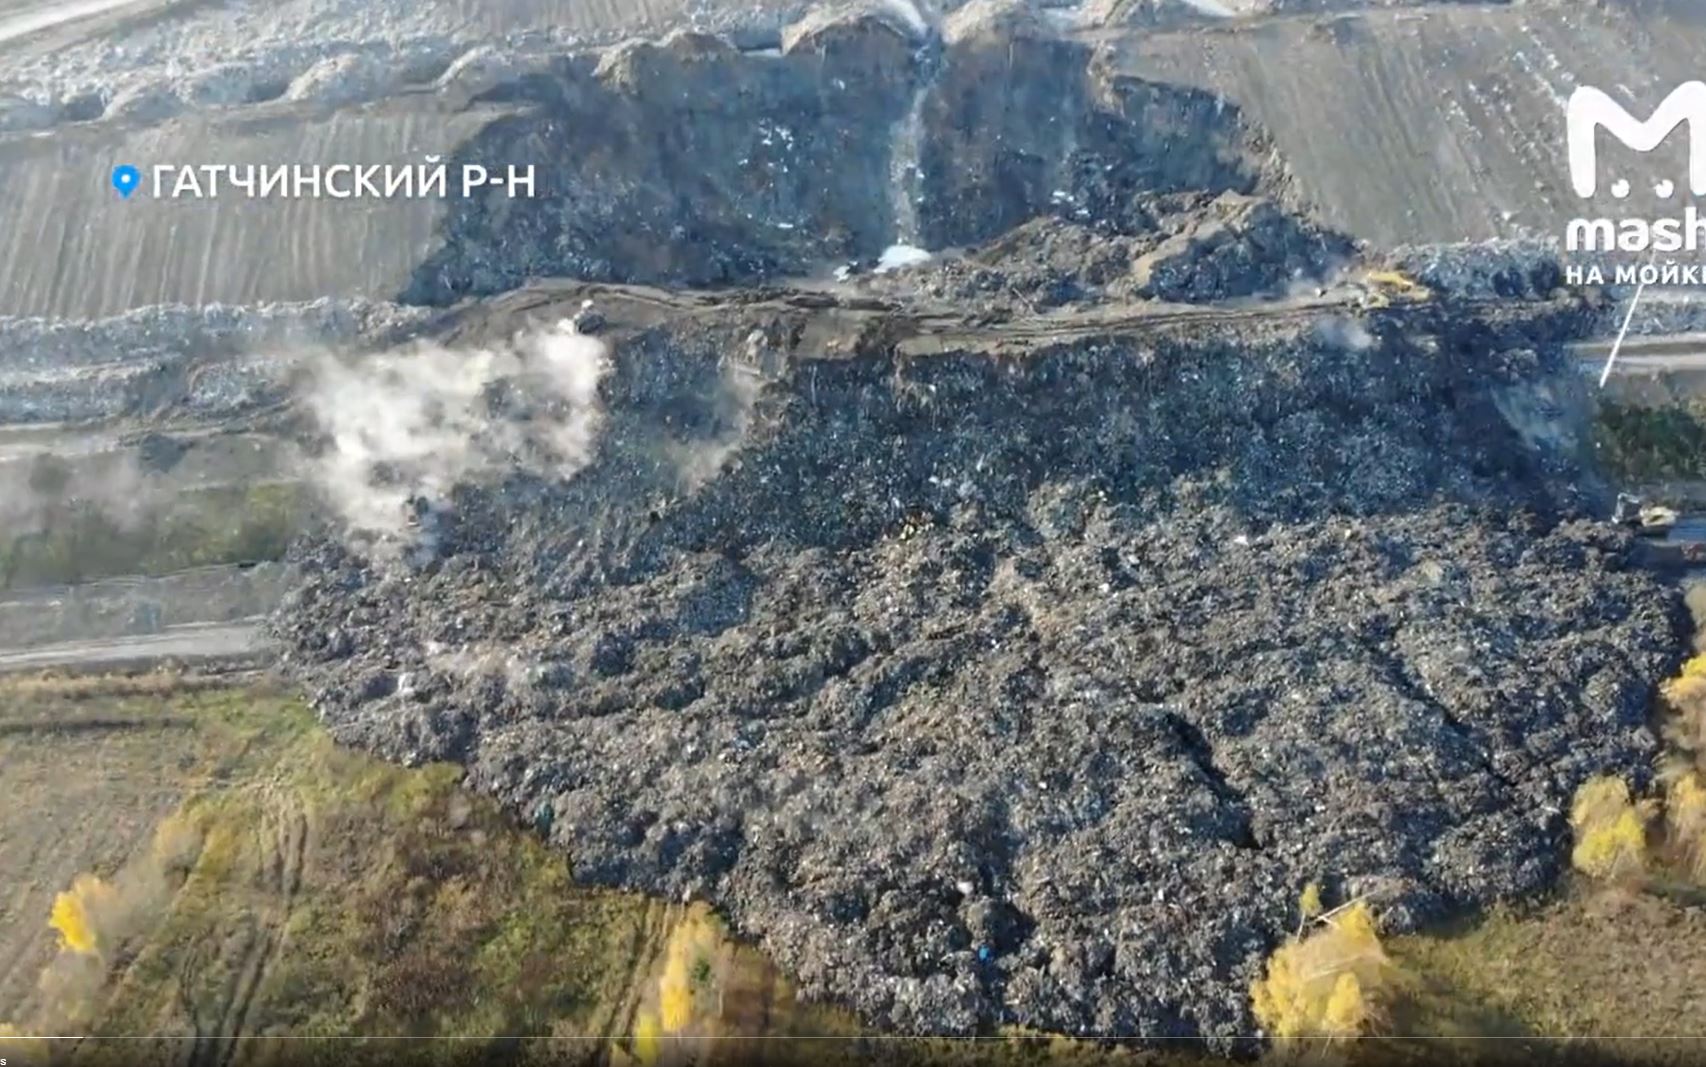 The landslide at a landfill site Novyi Svet (Новый свет) in Russia.